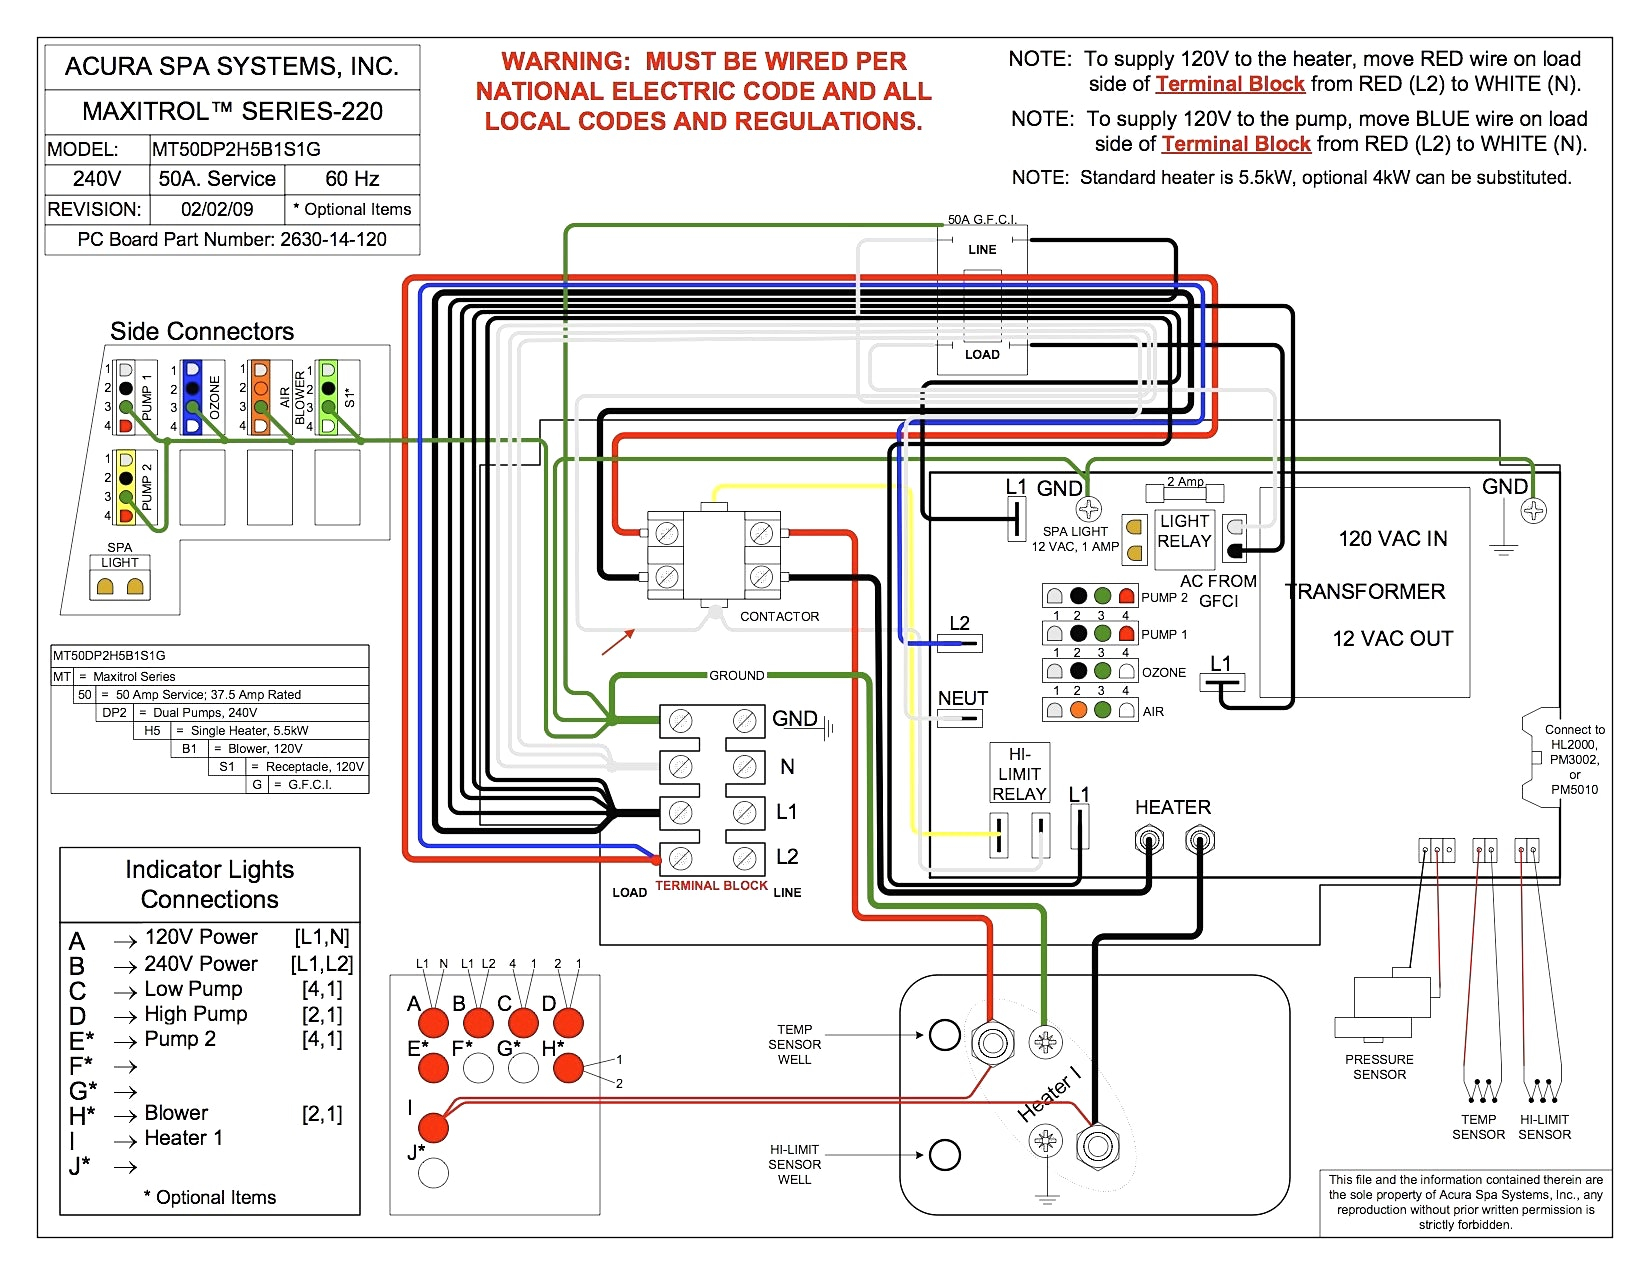 Lenel Access Control Wiring Diagram Sample | Wiring Diagram Sample